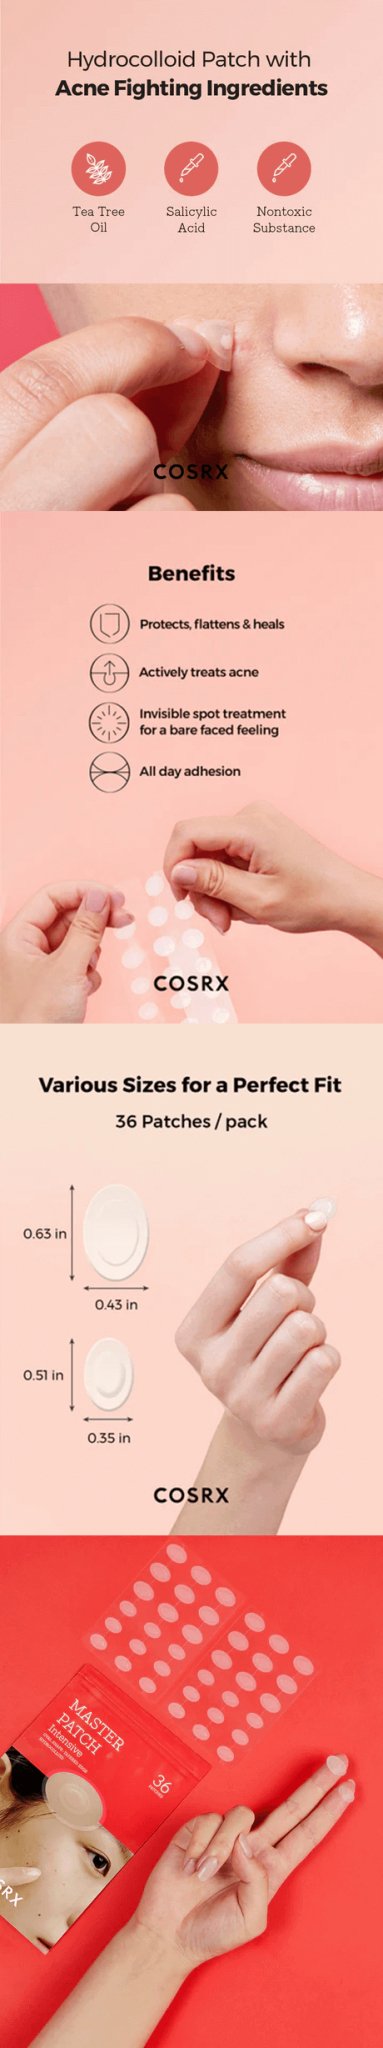 COSRX Master Patch Intensive 36pcs